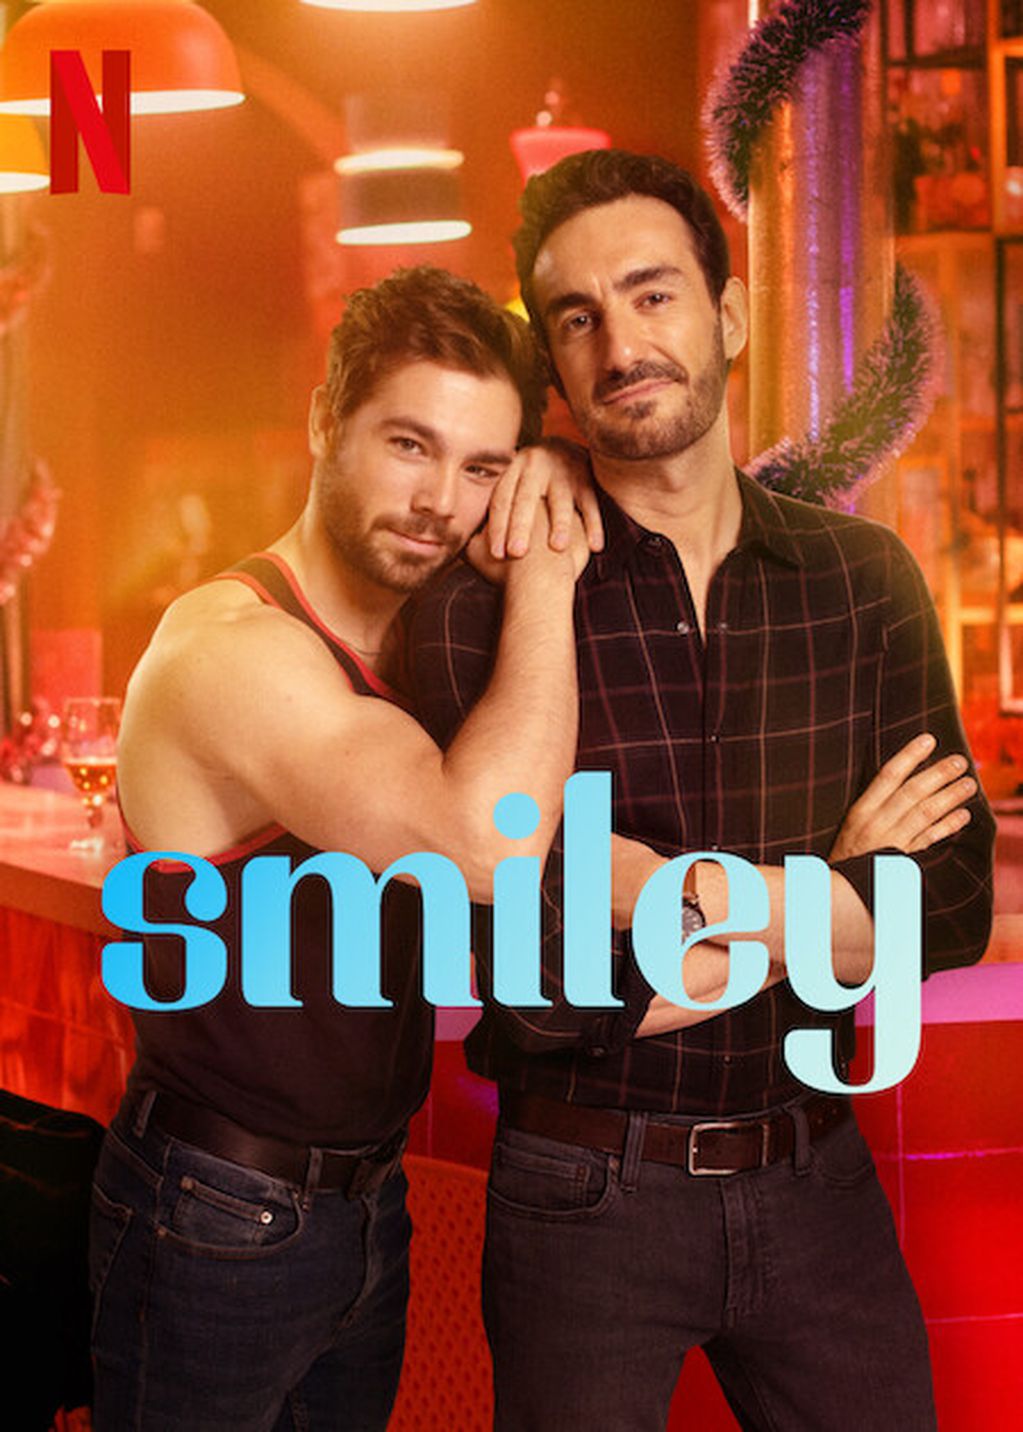 Smiley, disponible en Netflix.